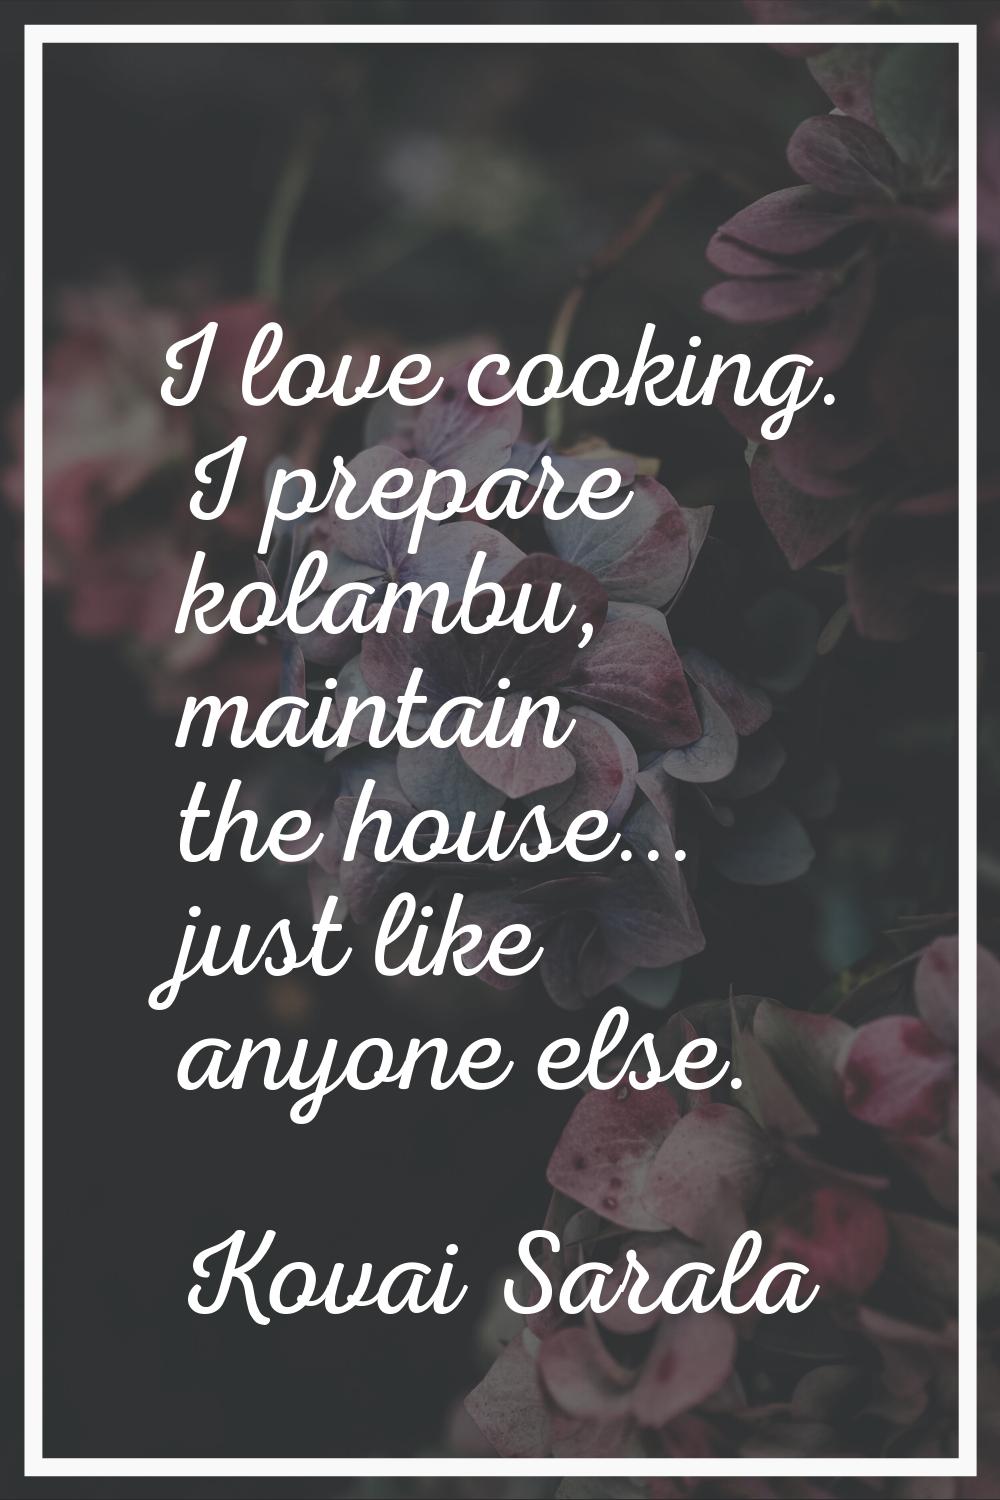 I love cooking. I prepare kolambu, maintain the house... just like anyone else.